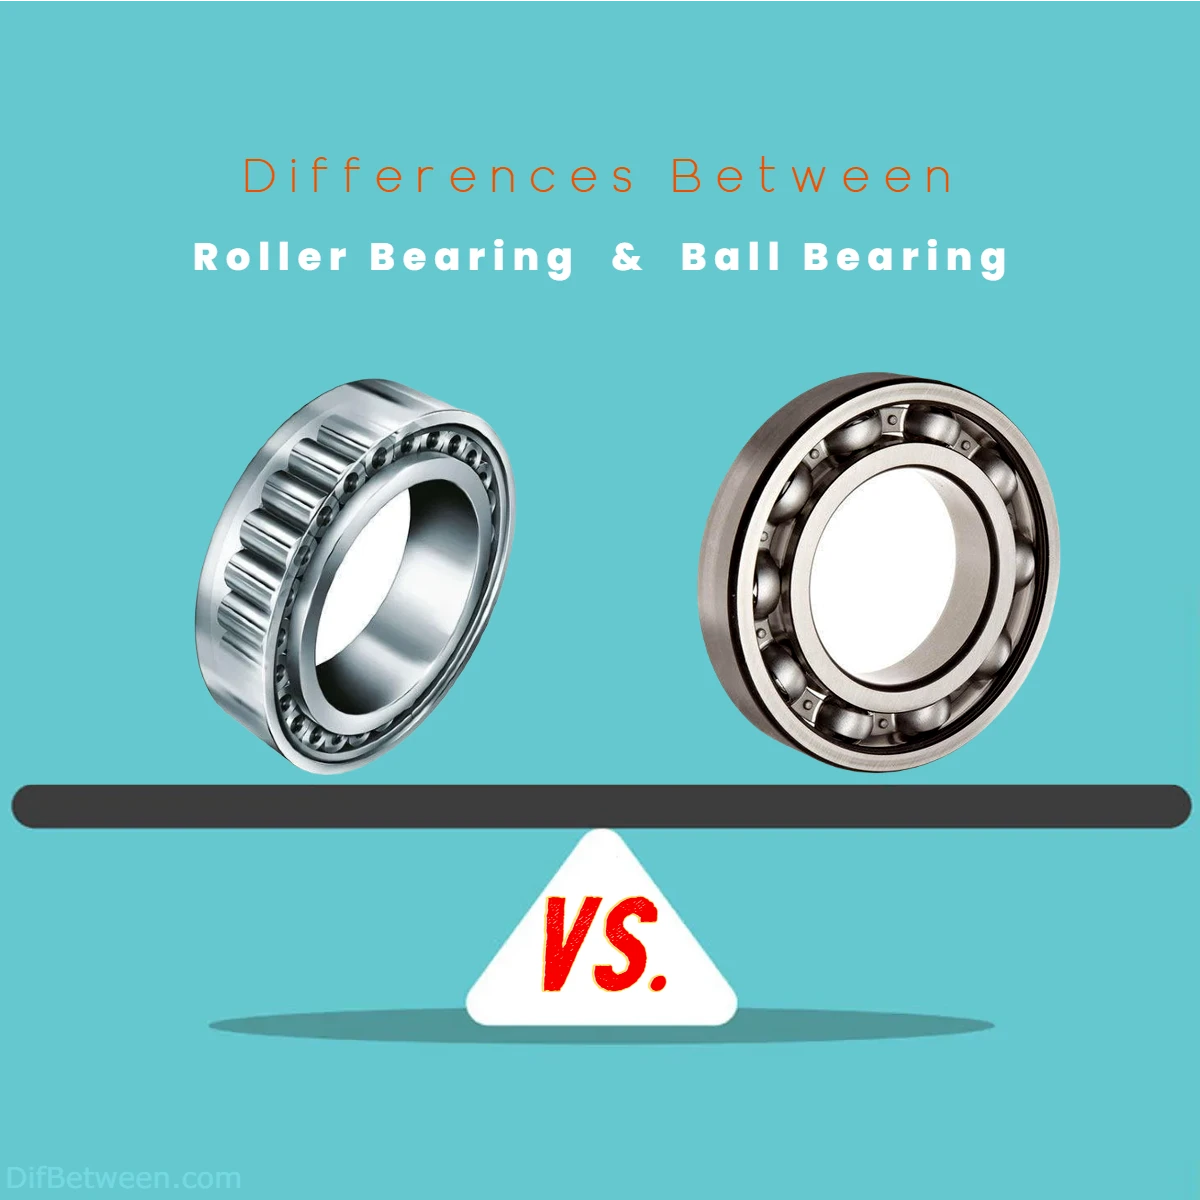 Differences Between Roller Bearing vs Ball Bearing